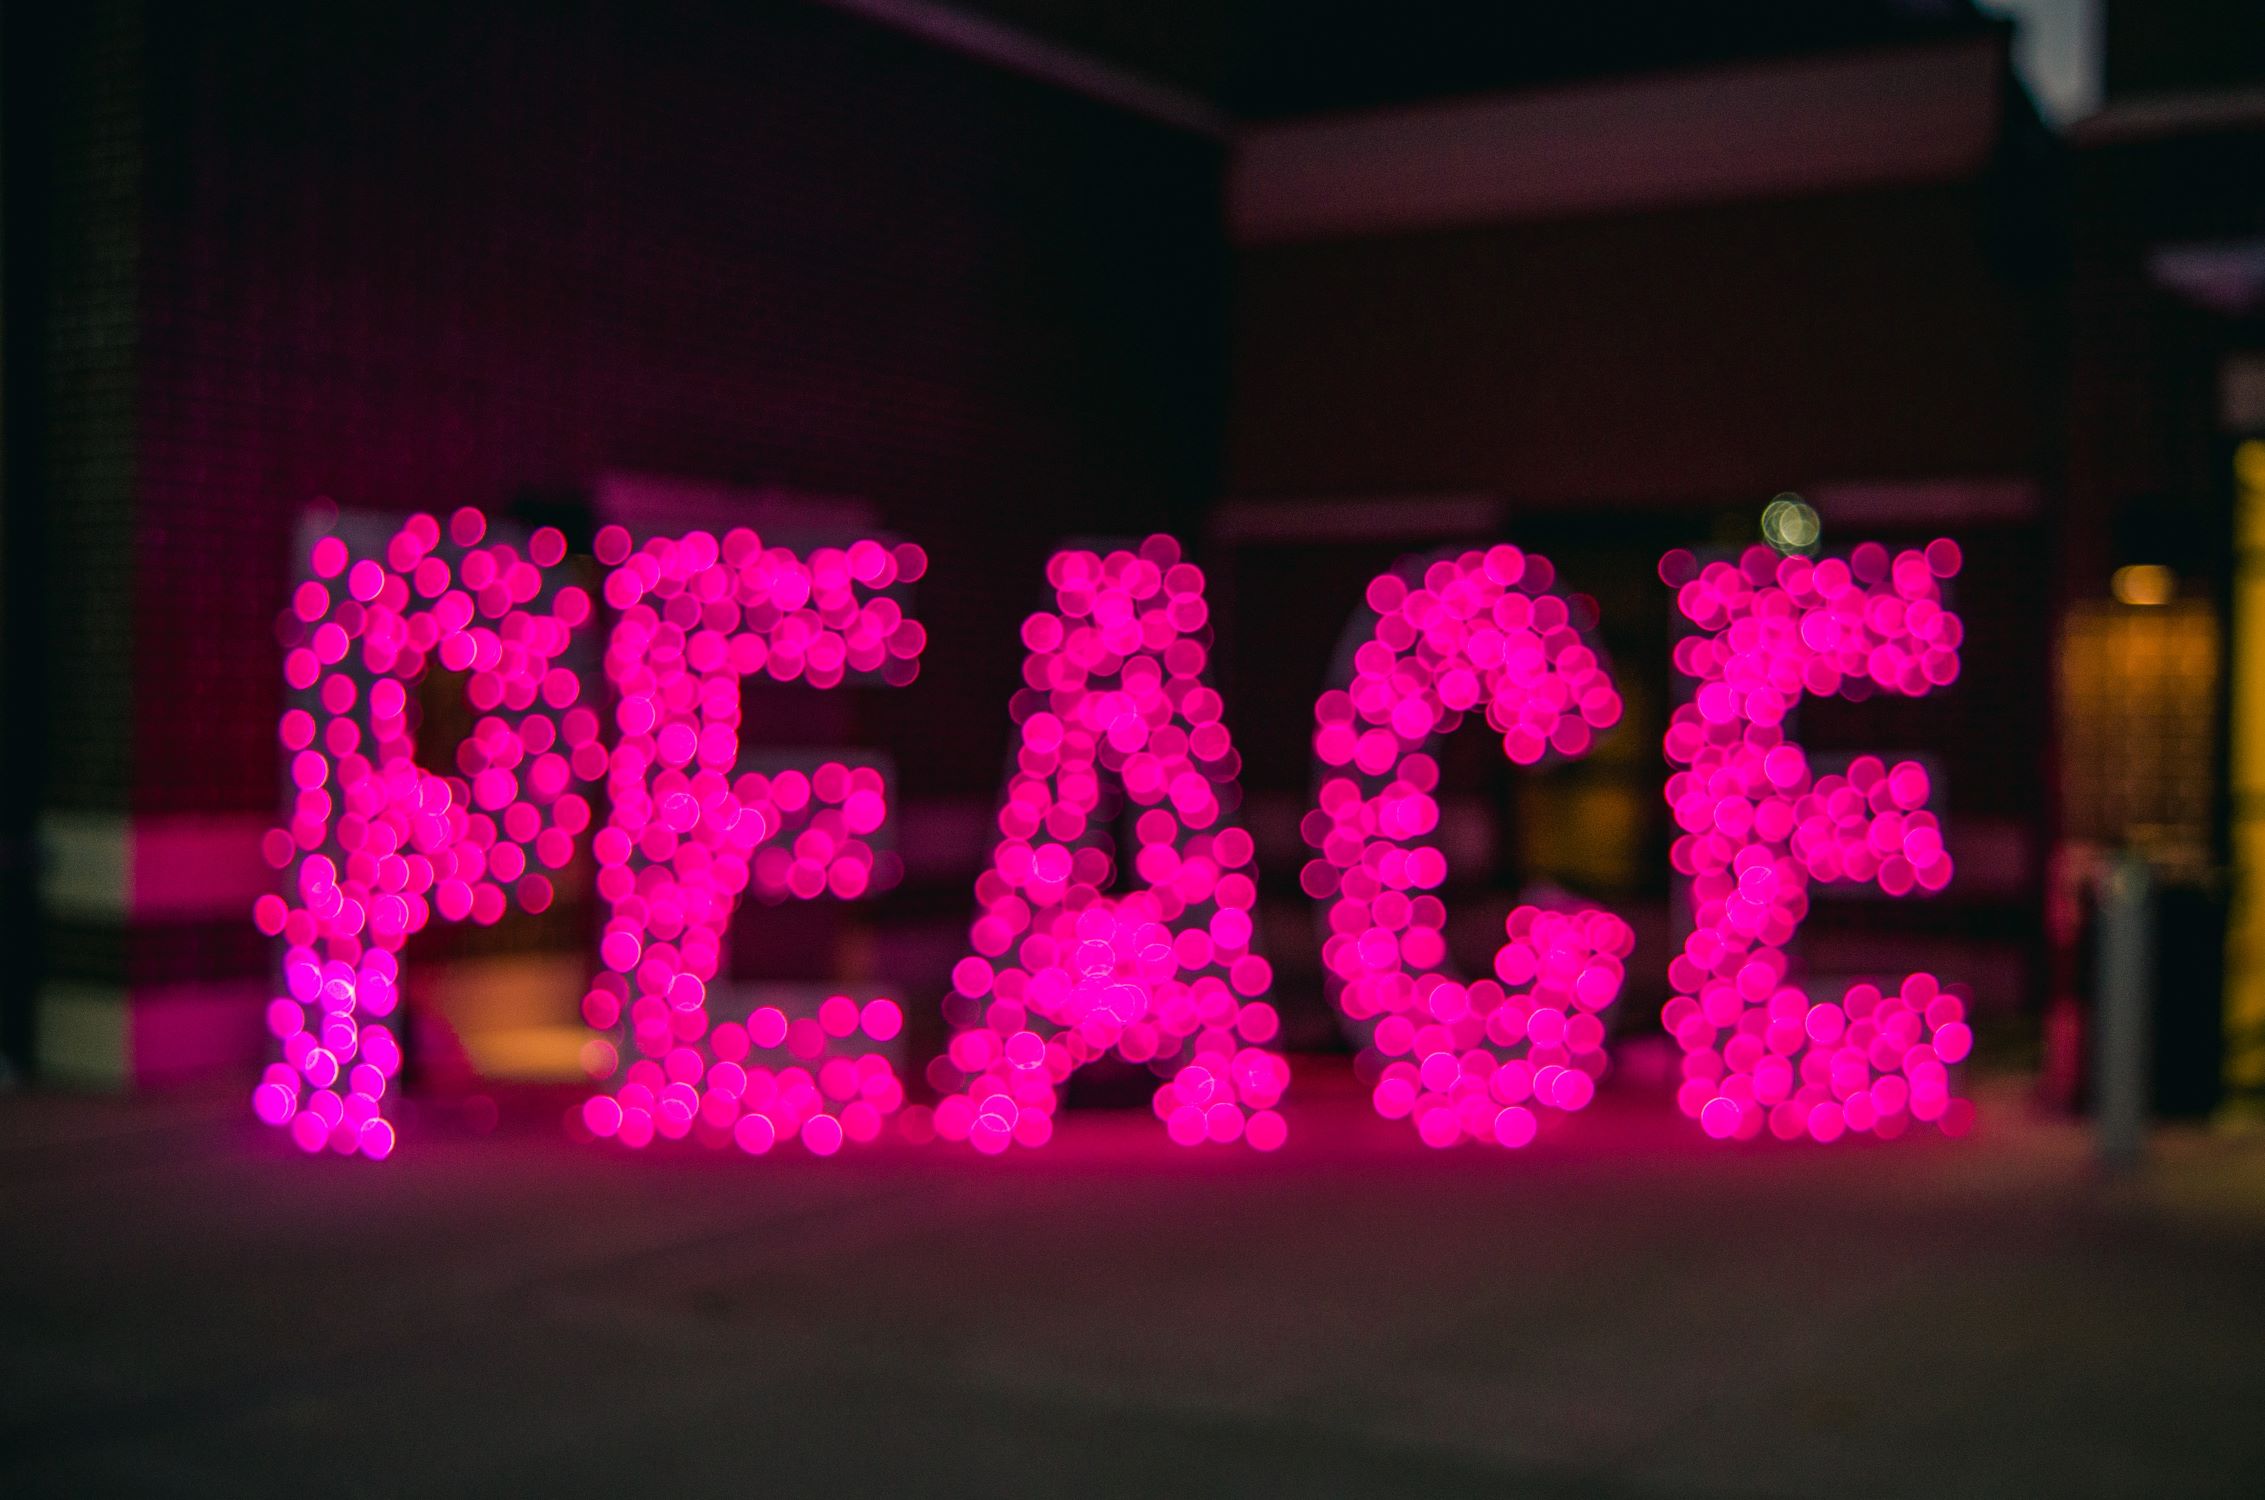 Word peace